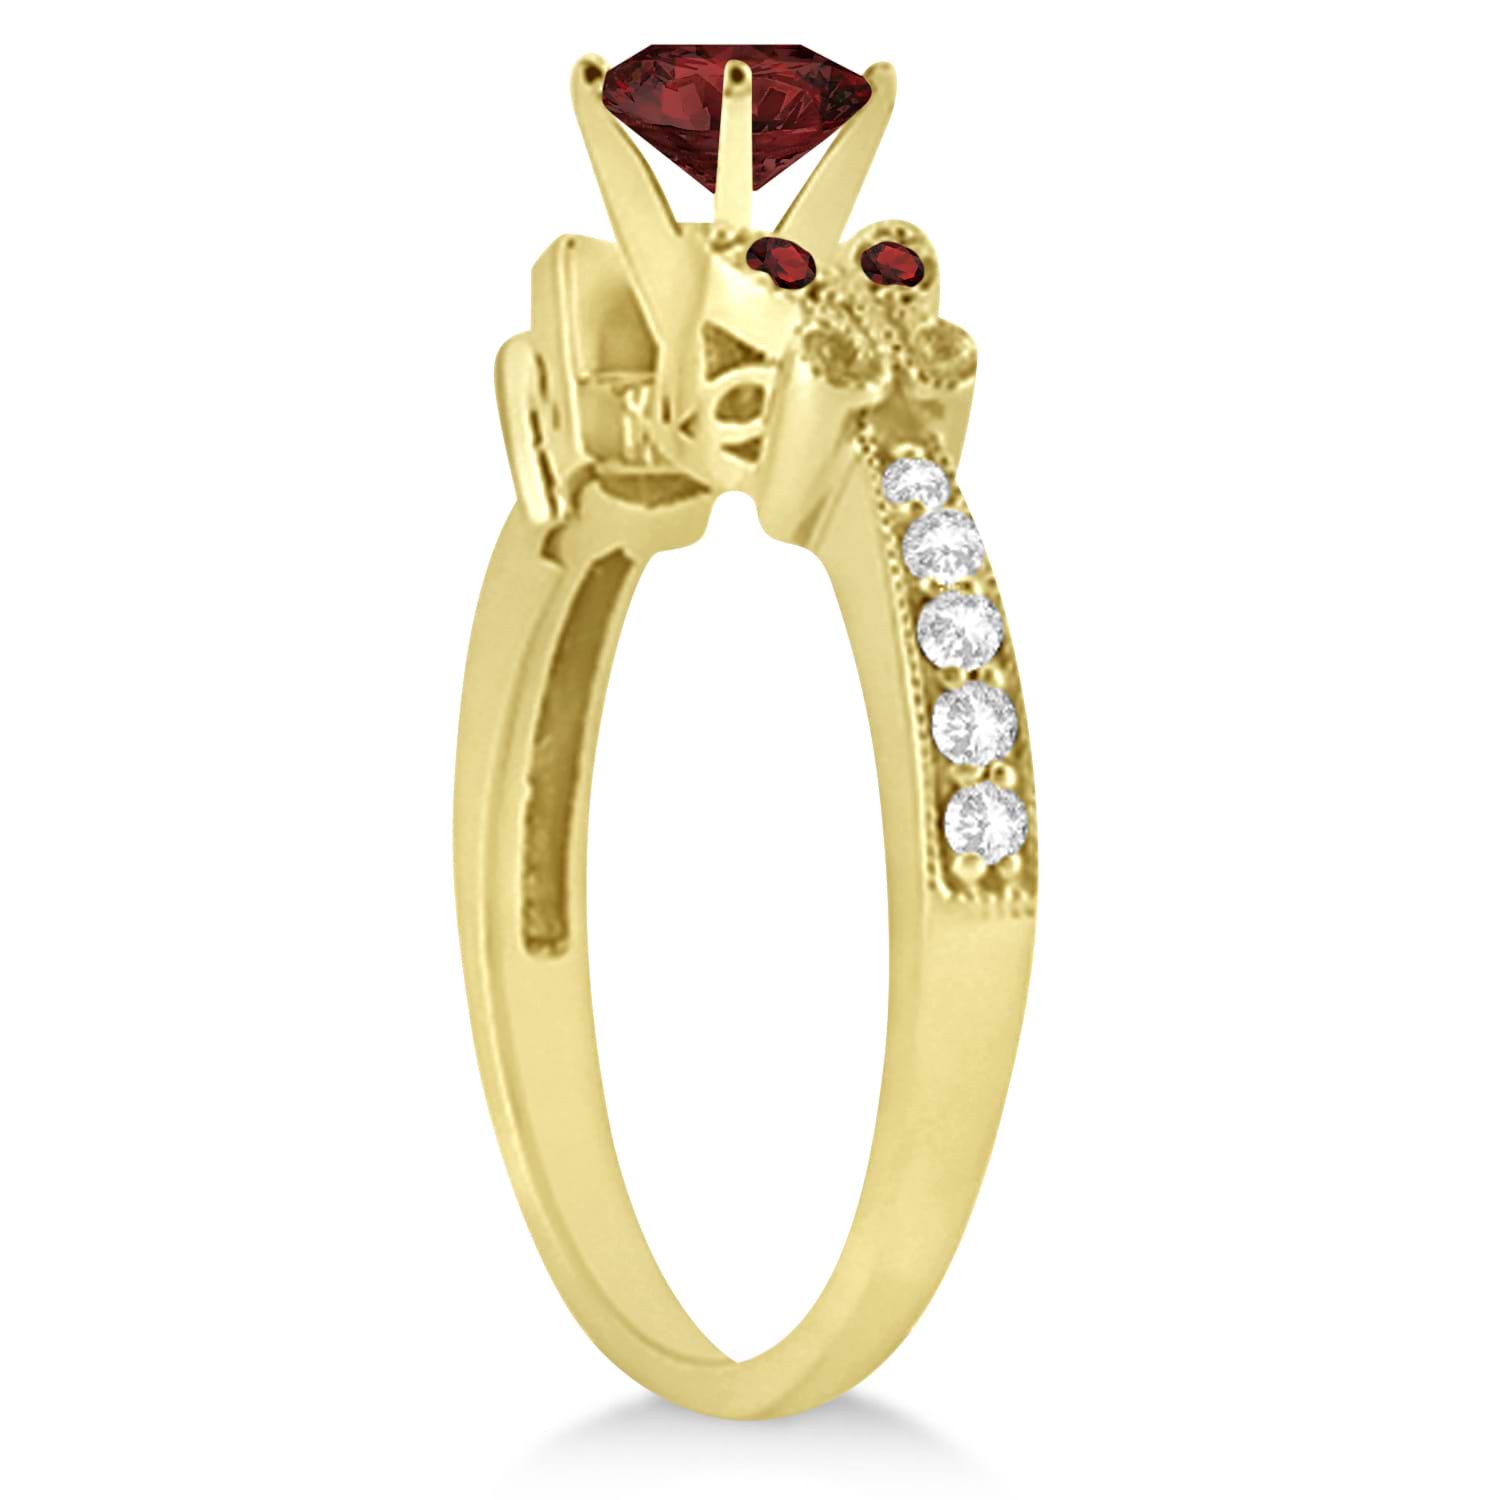 Butterfly Genuine Garnet & Diamond Engagement Ring 18K Yellow Gold 0.88ct